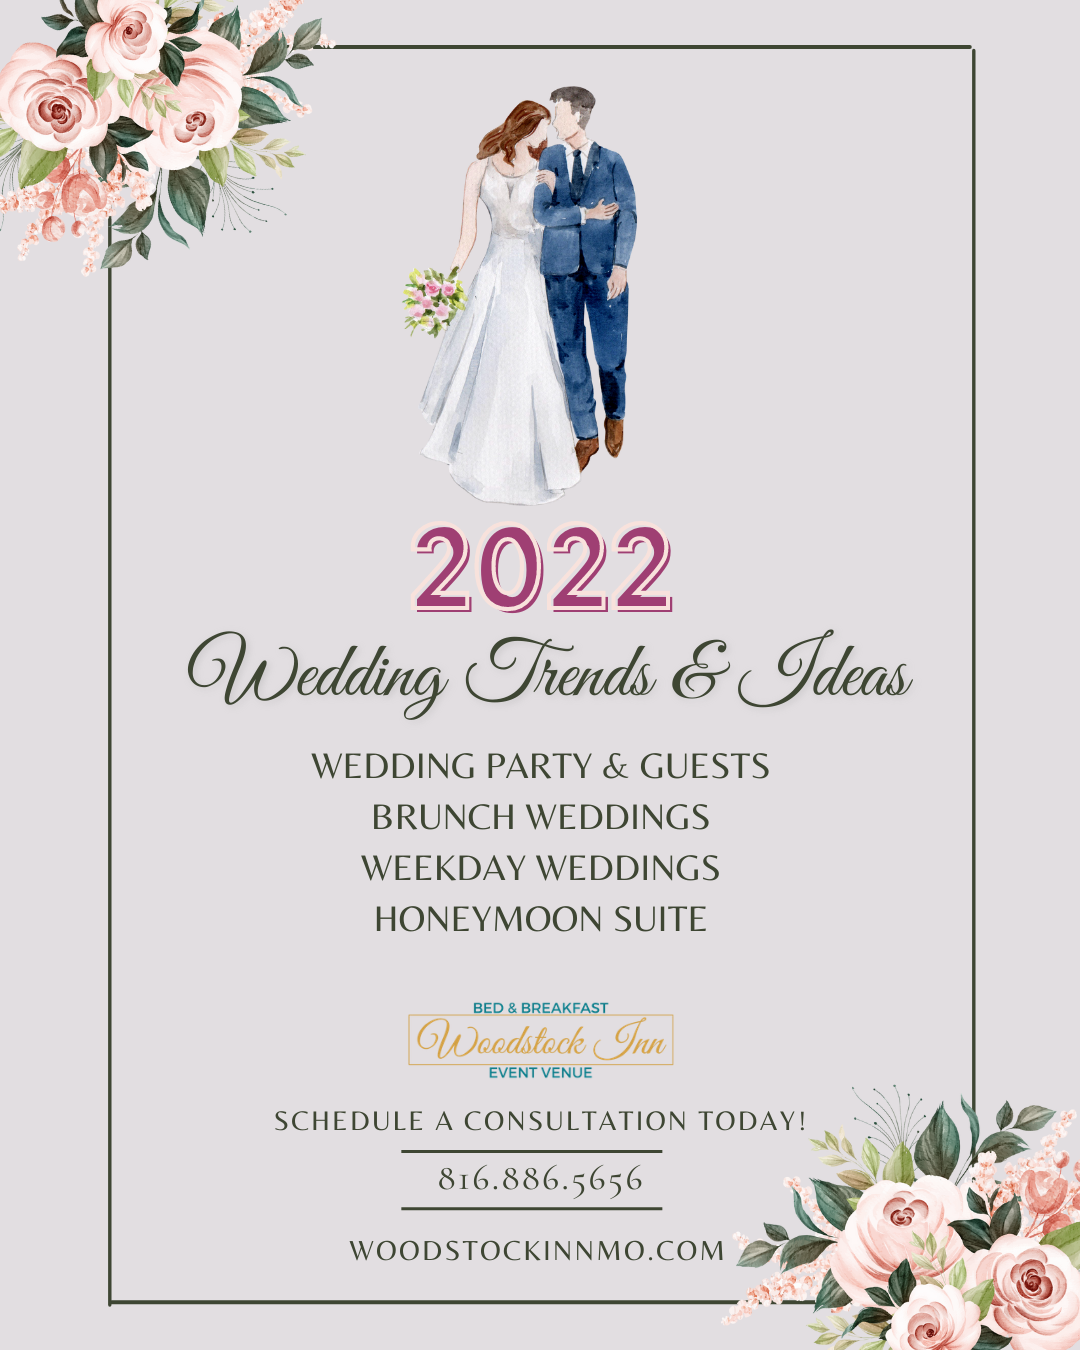 WI-2022-wedding-trends-ideas